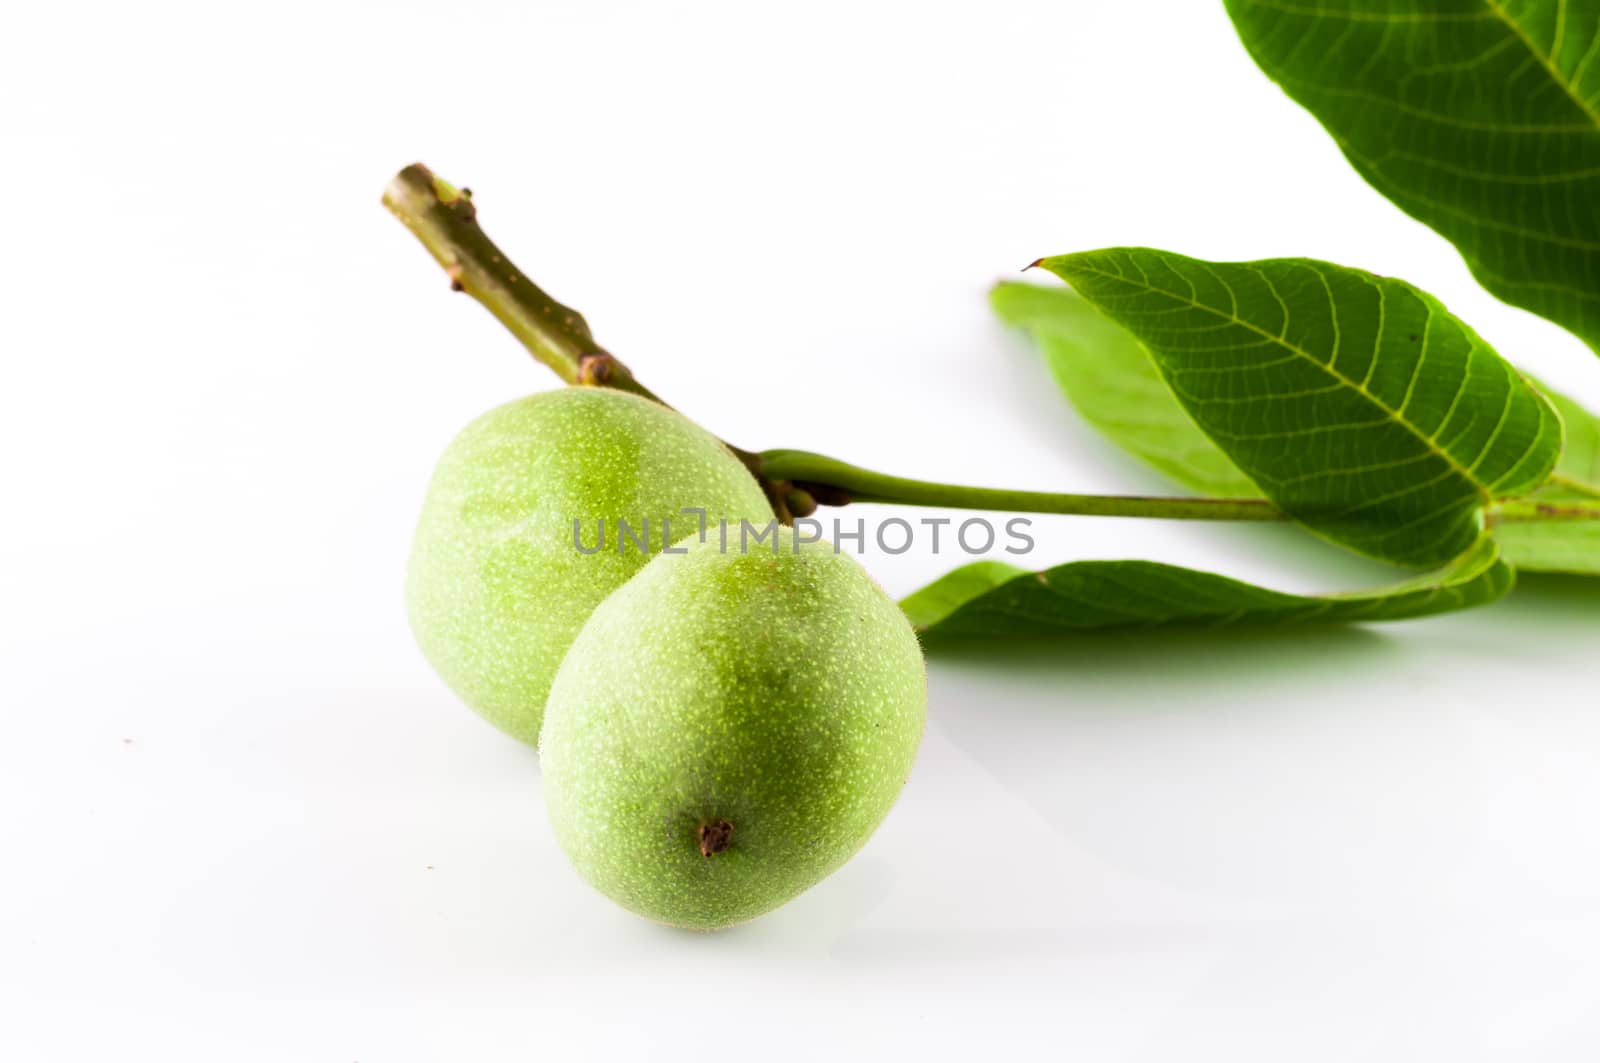 Closeup of Isolated fresh walnuts on white background